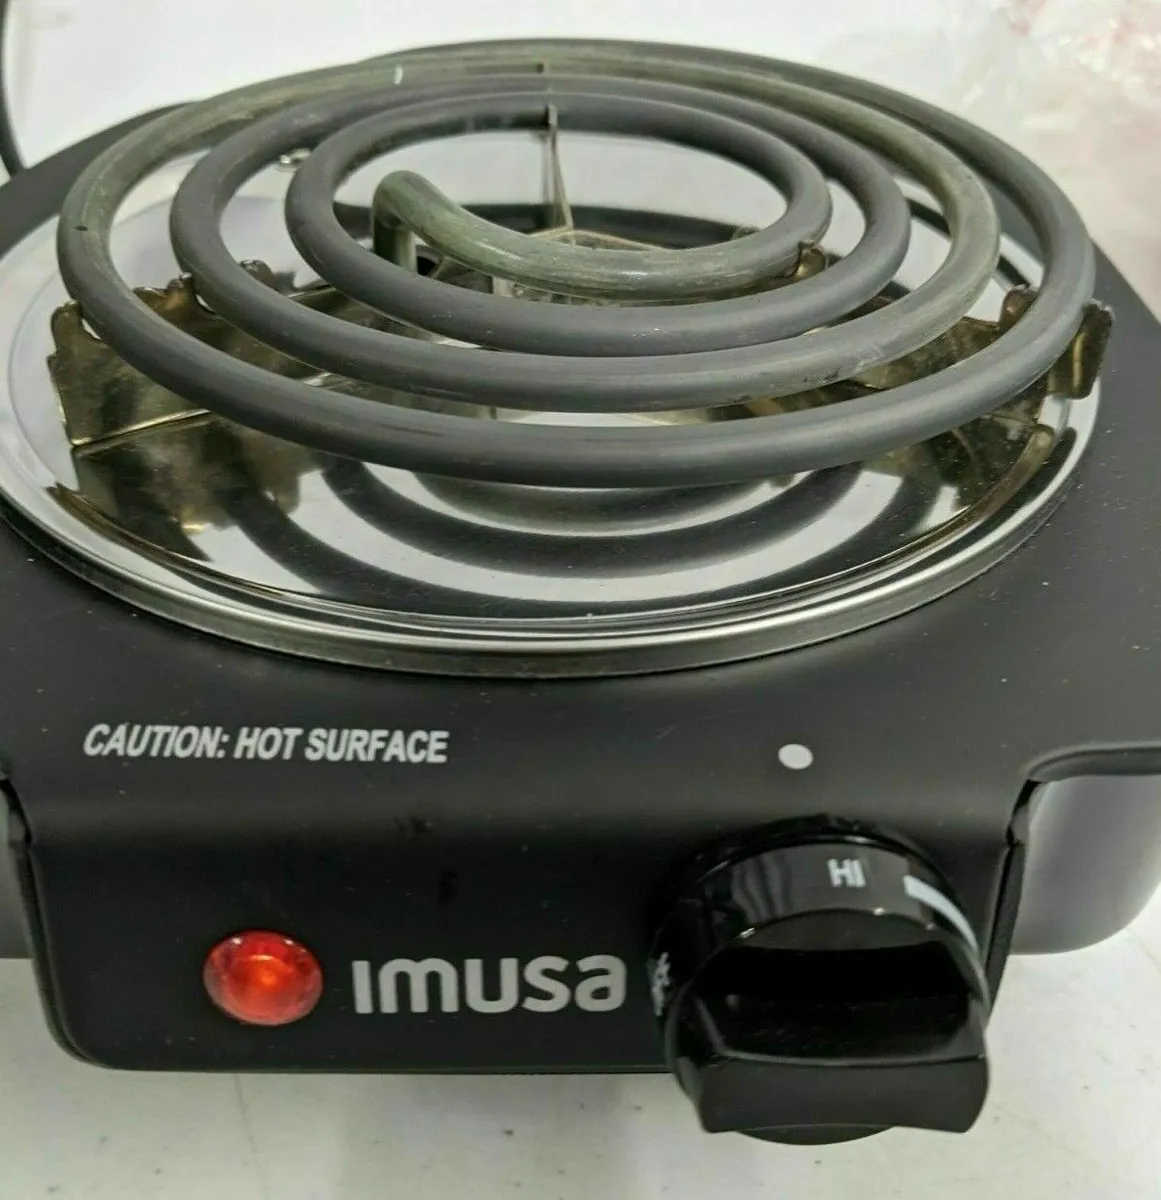 IMUSA USA GAU-80305 Electric Single Burner 1100-Watts, Black